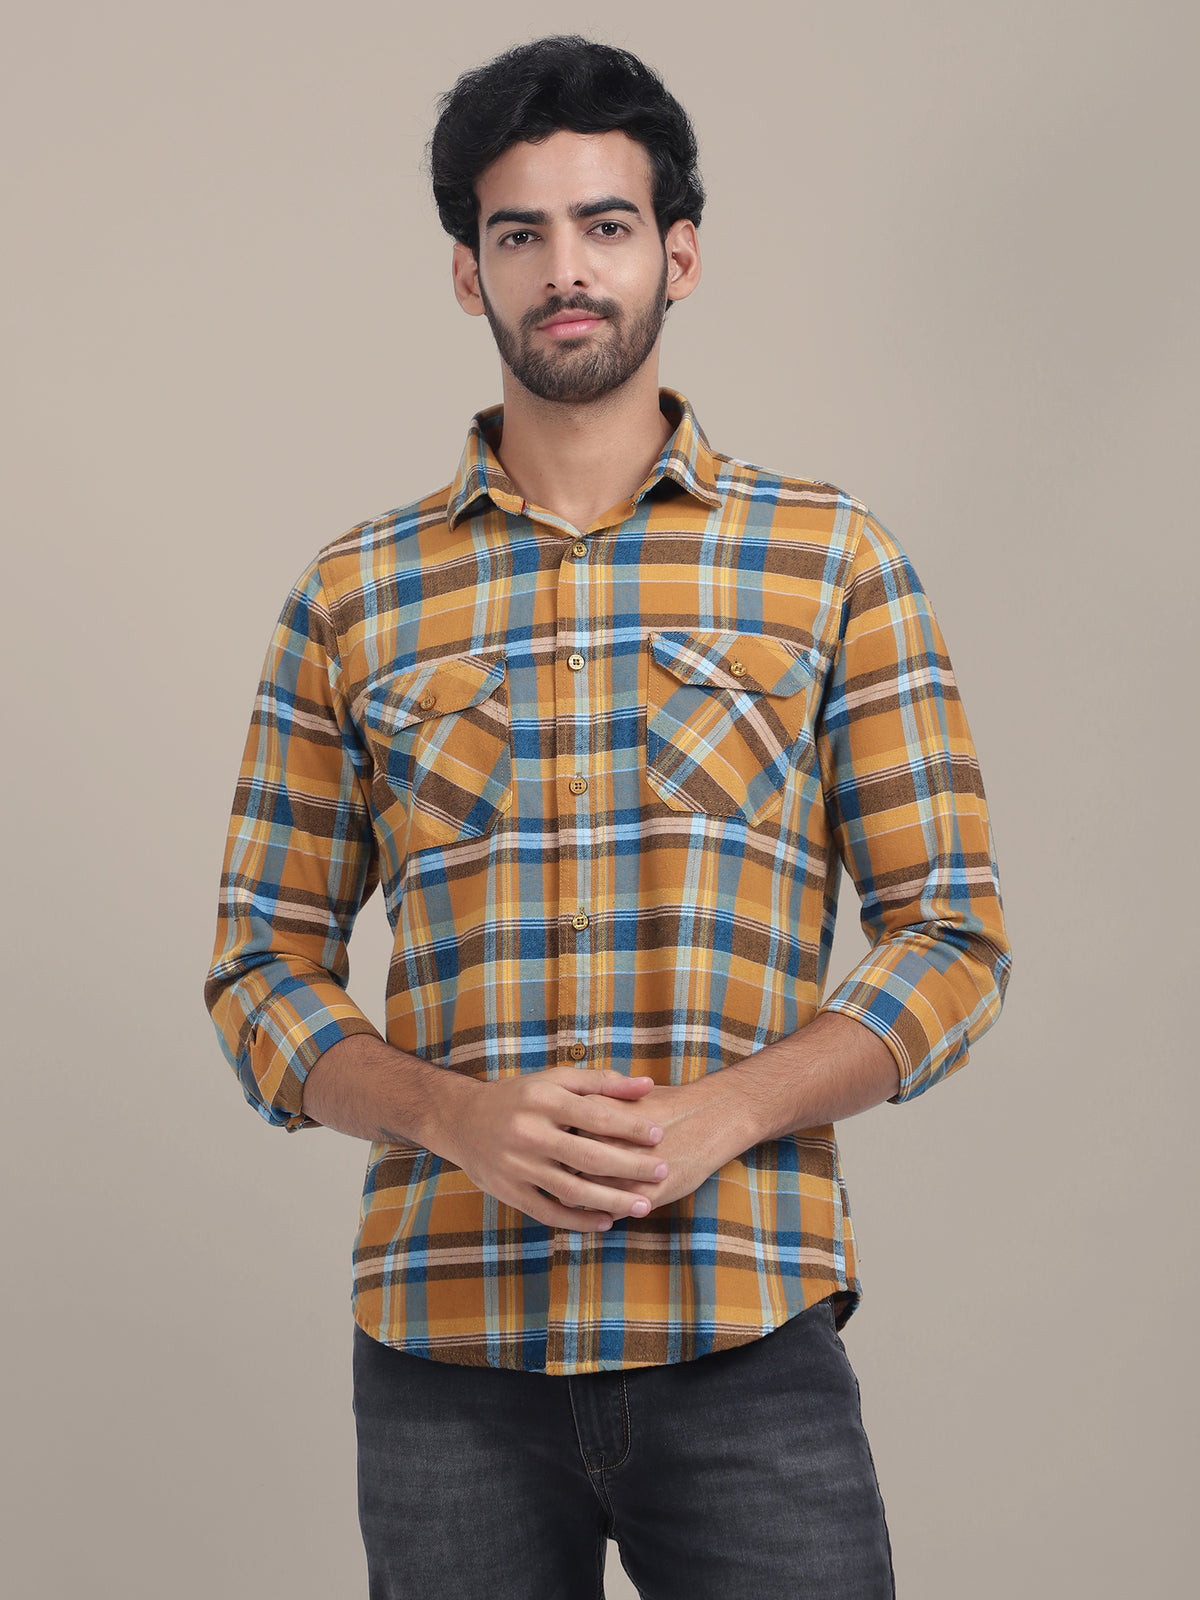 Premium Cotton Yellow Plaid Flannel Shirt